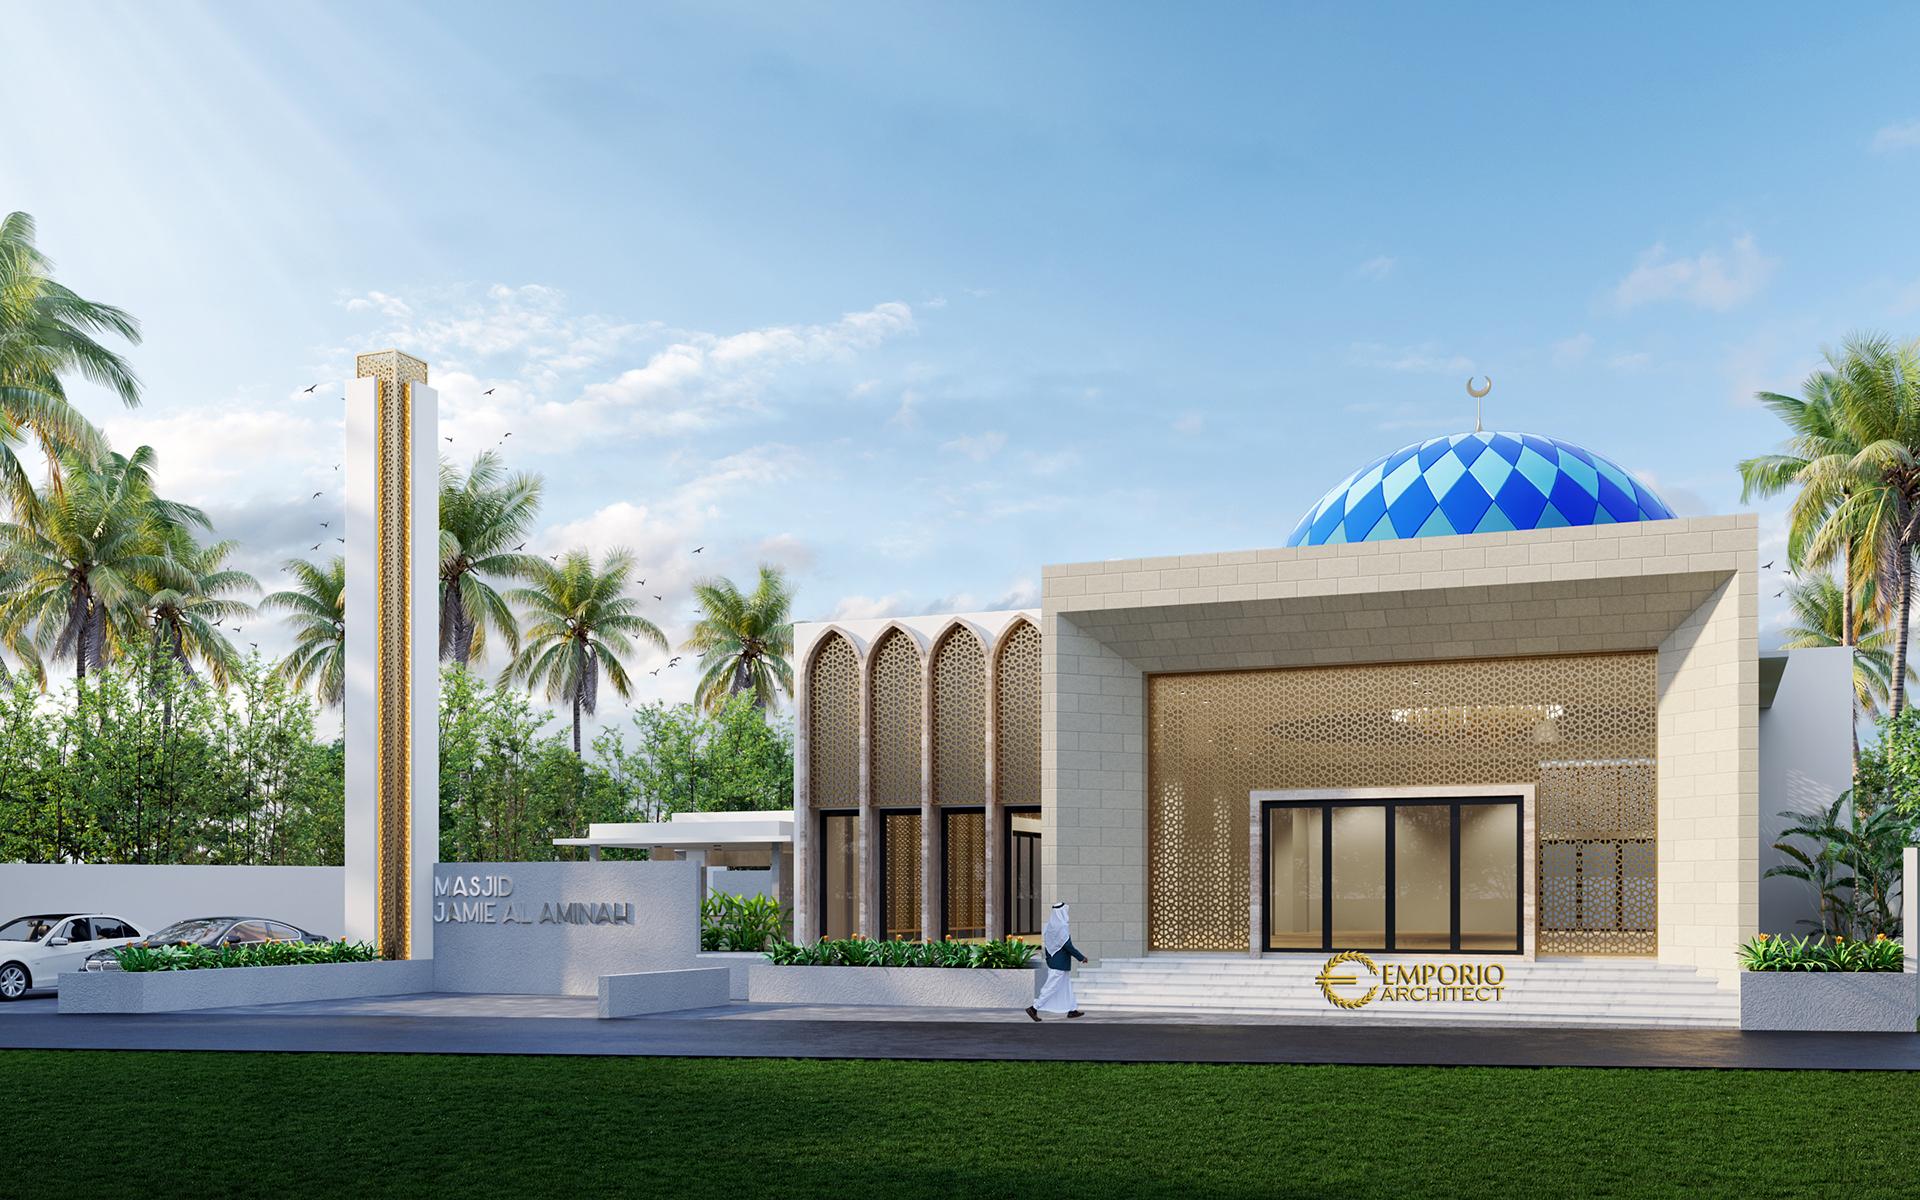 17 Desain  Kamar Mandi Masjid  Untuk Mempercantik Ruangan